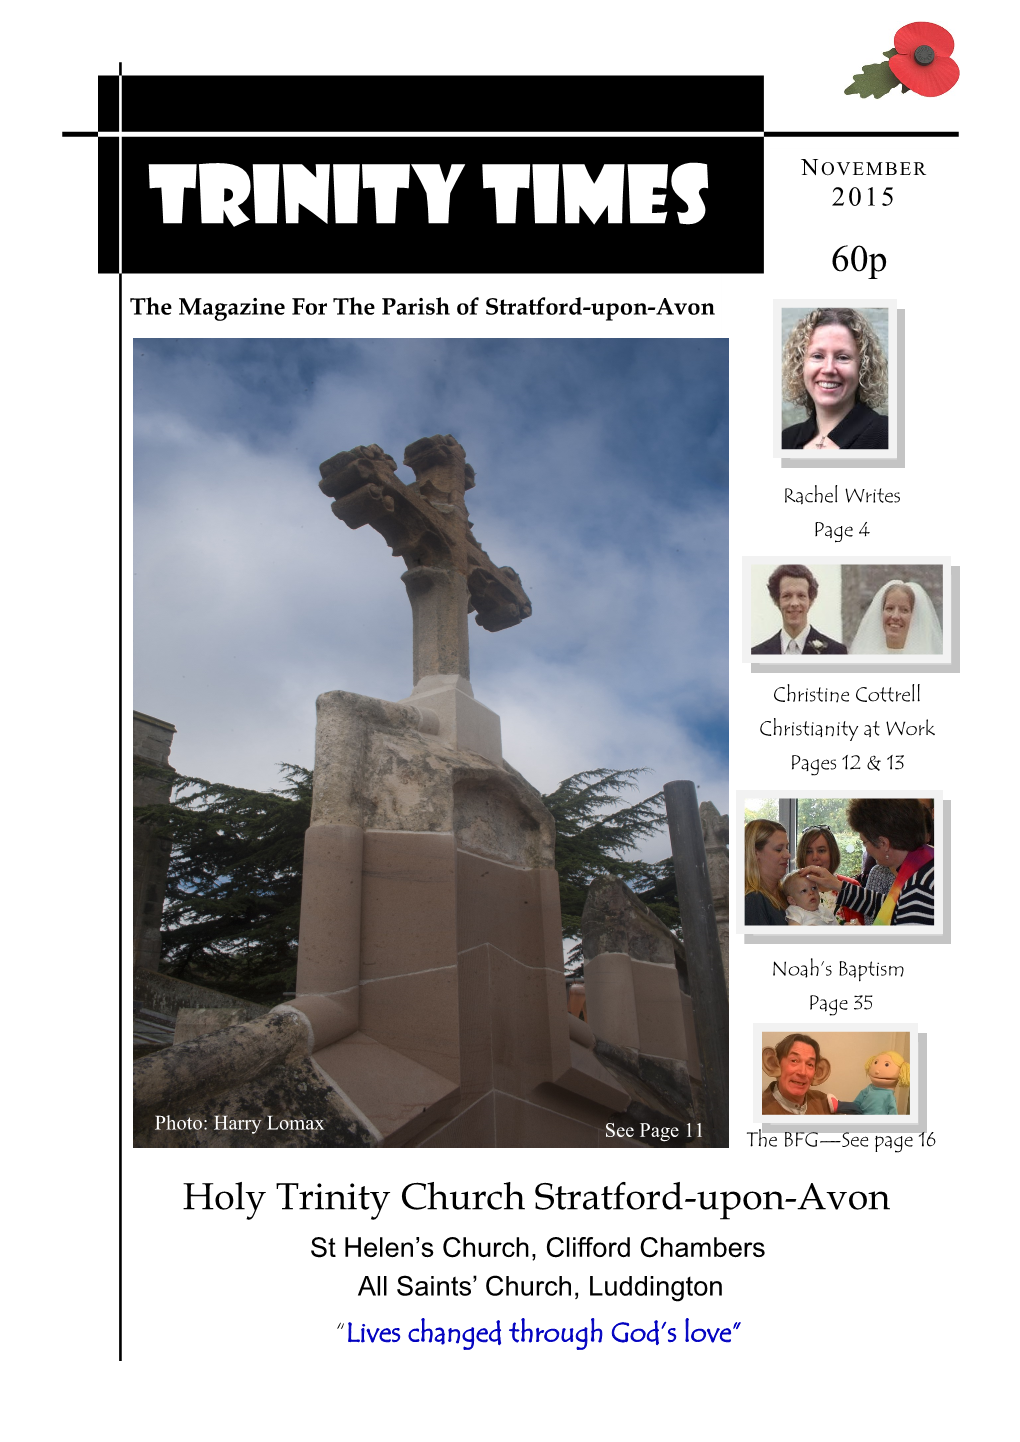 Trinity Times July Edition